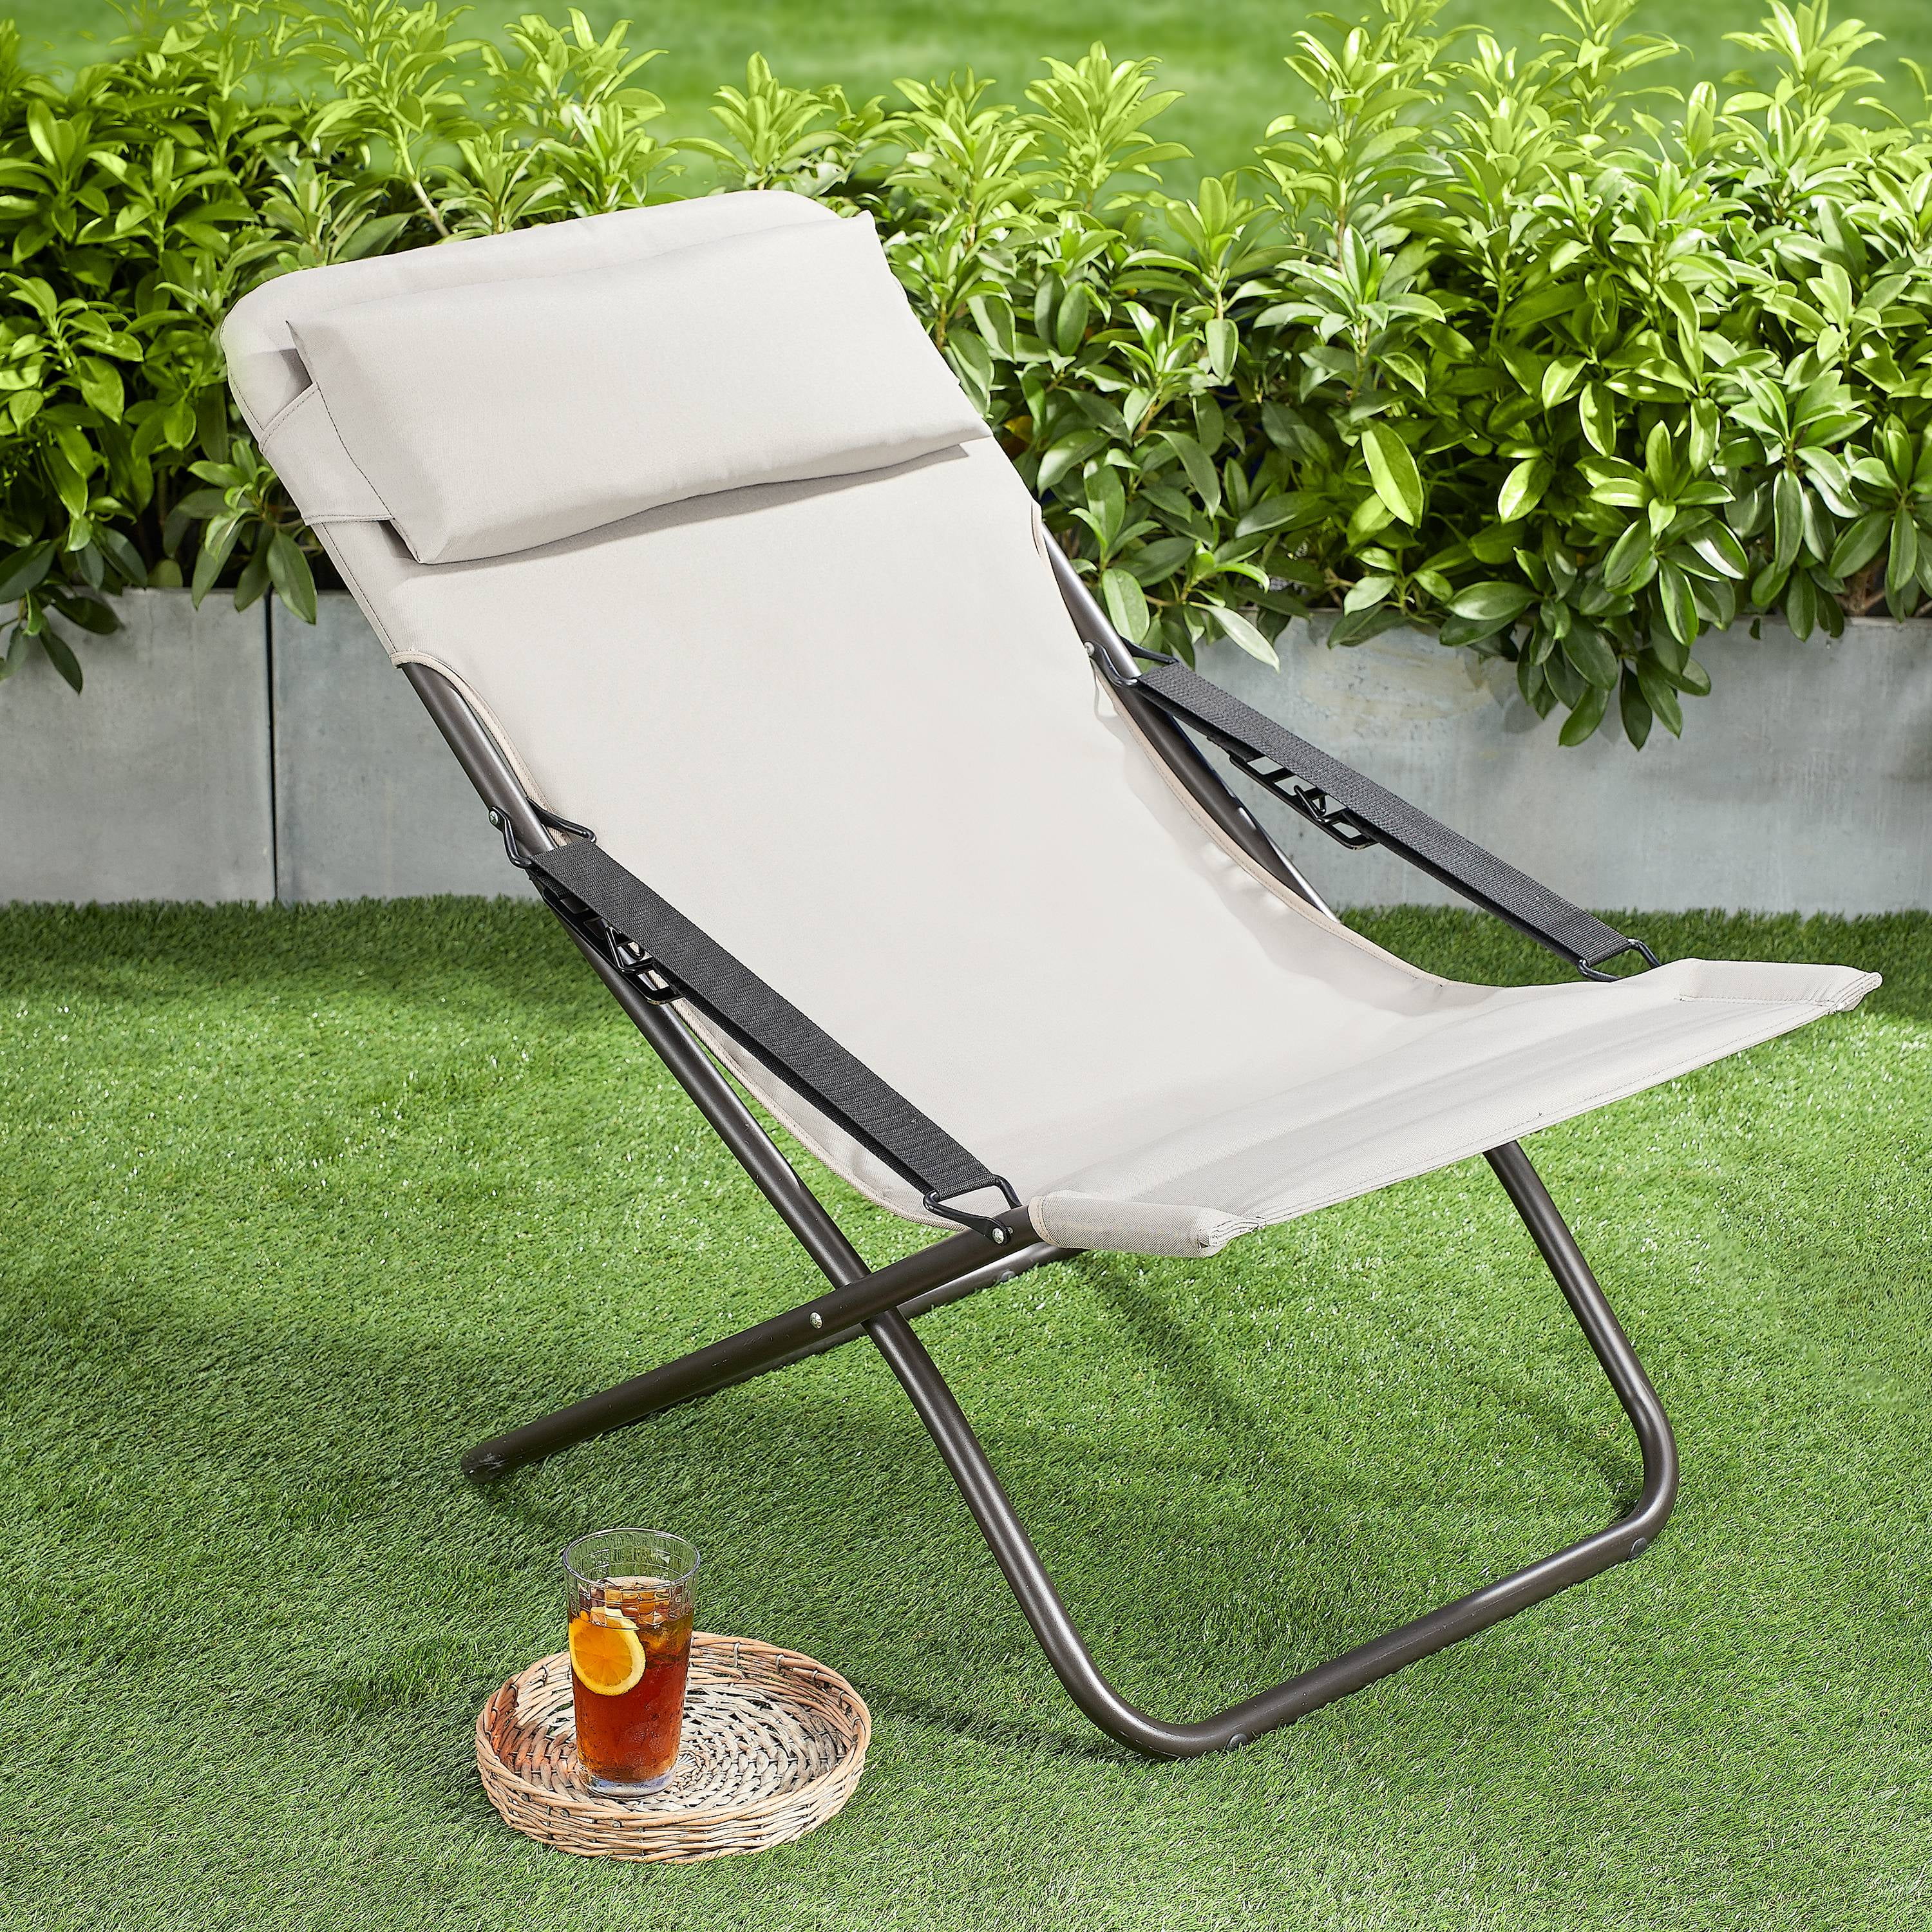 Mainstays Carine Outdoor Folding Lawn Chair - Walmart.com